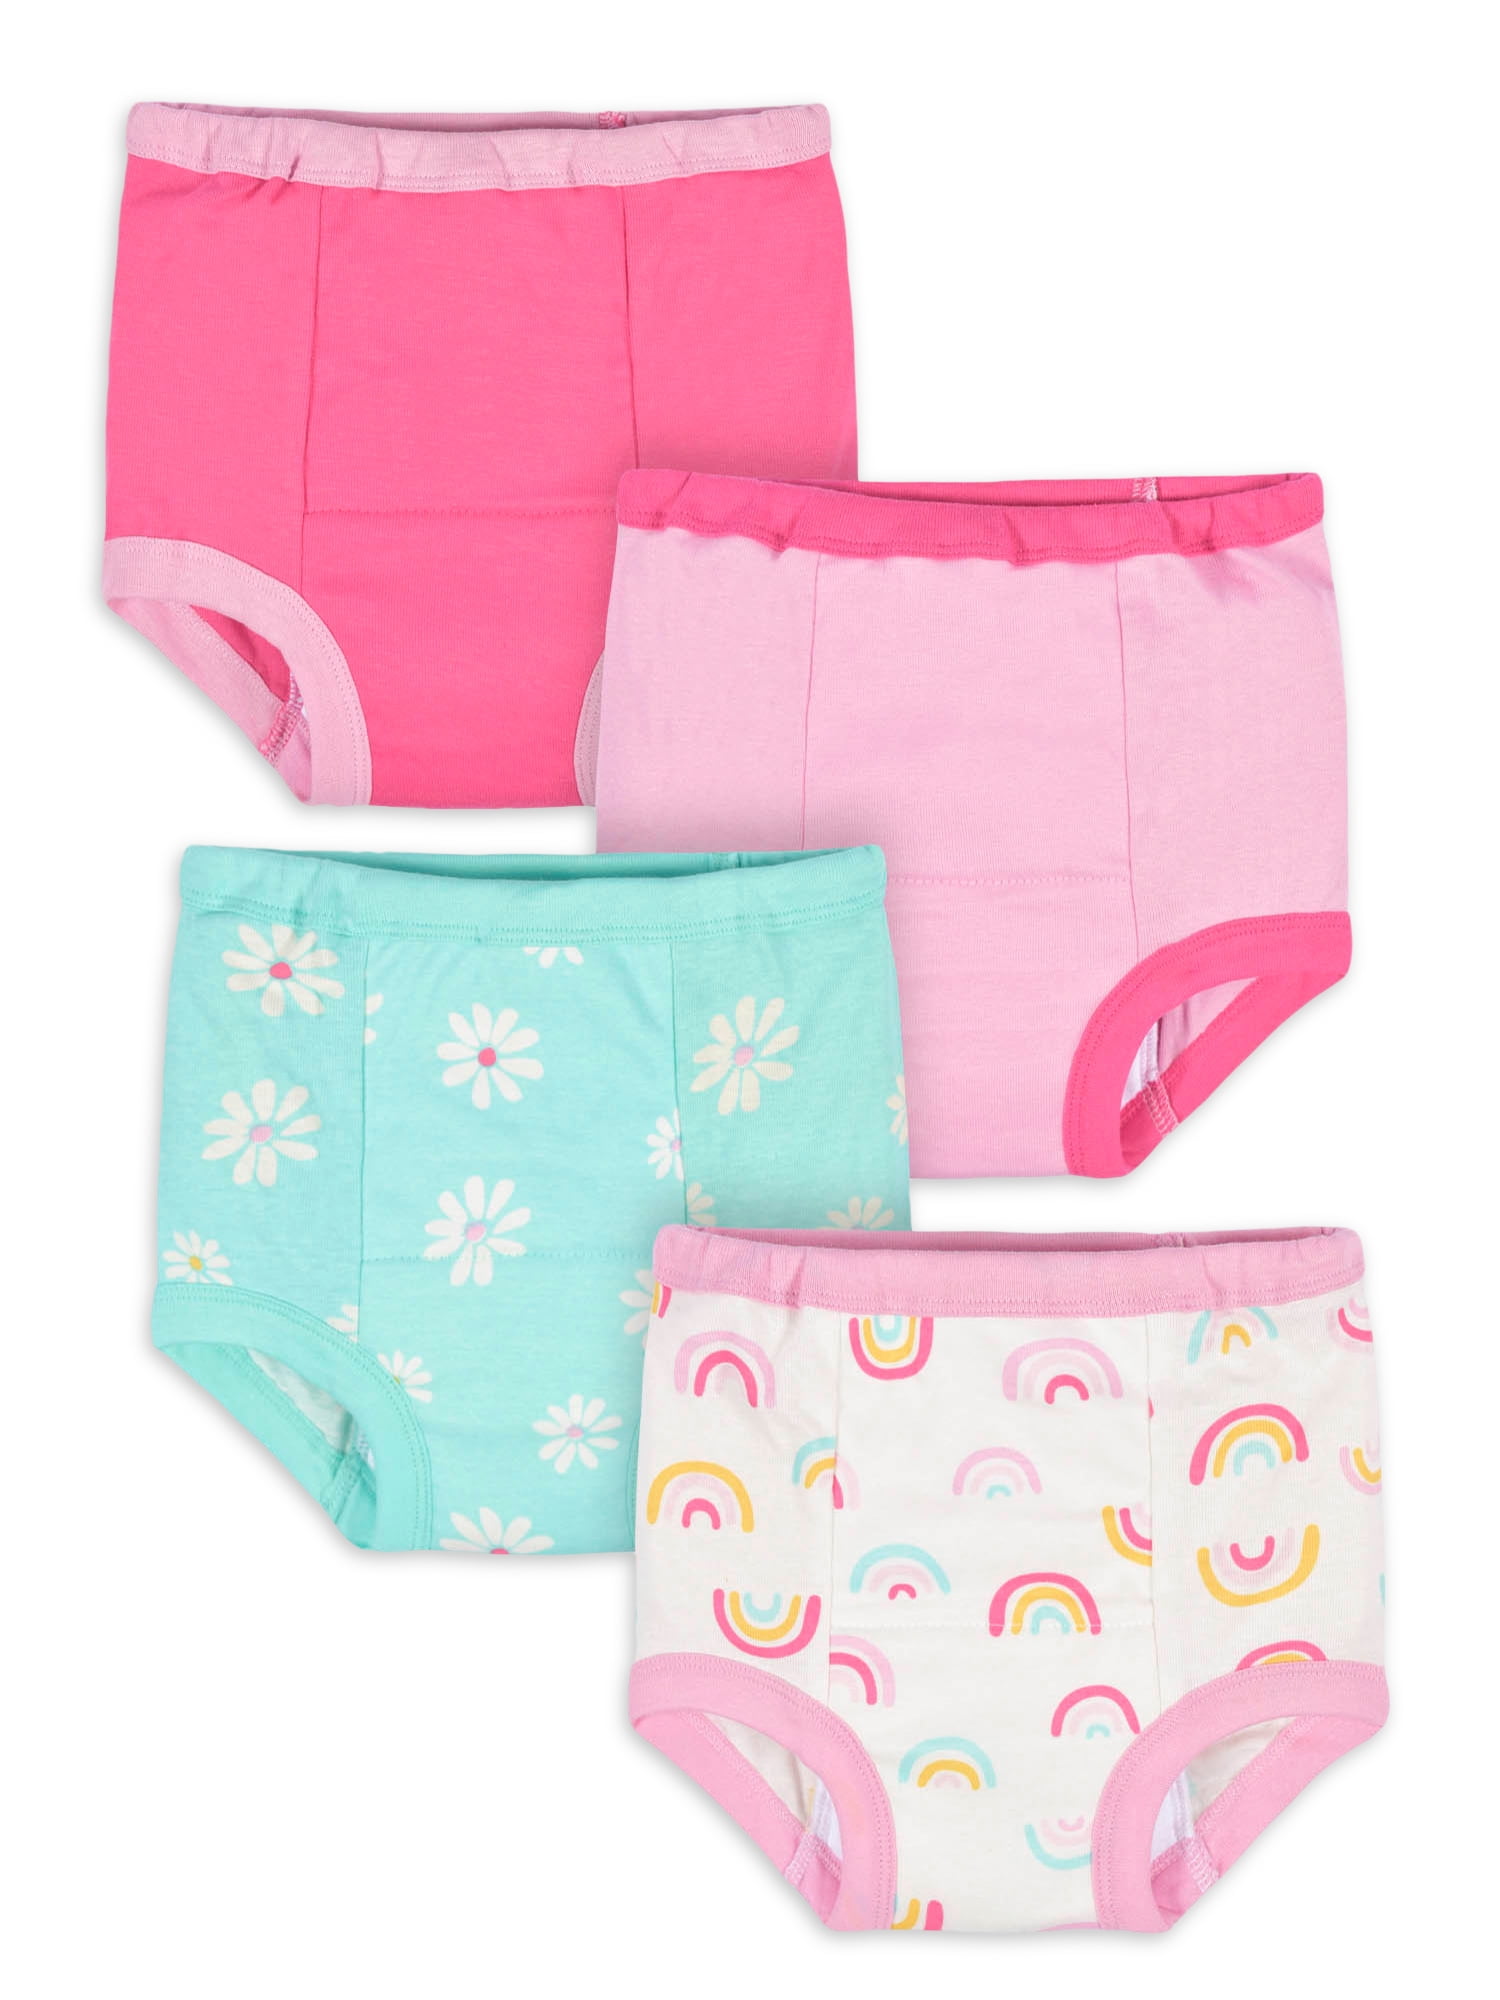 Potty Training Pants Girls 2T,3T,4T,Toddler Training Underwear For Baby  Girls 4 Pack White 2T